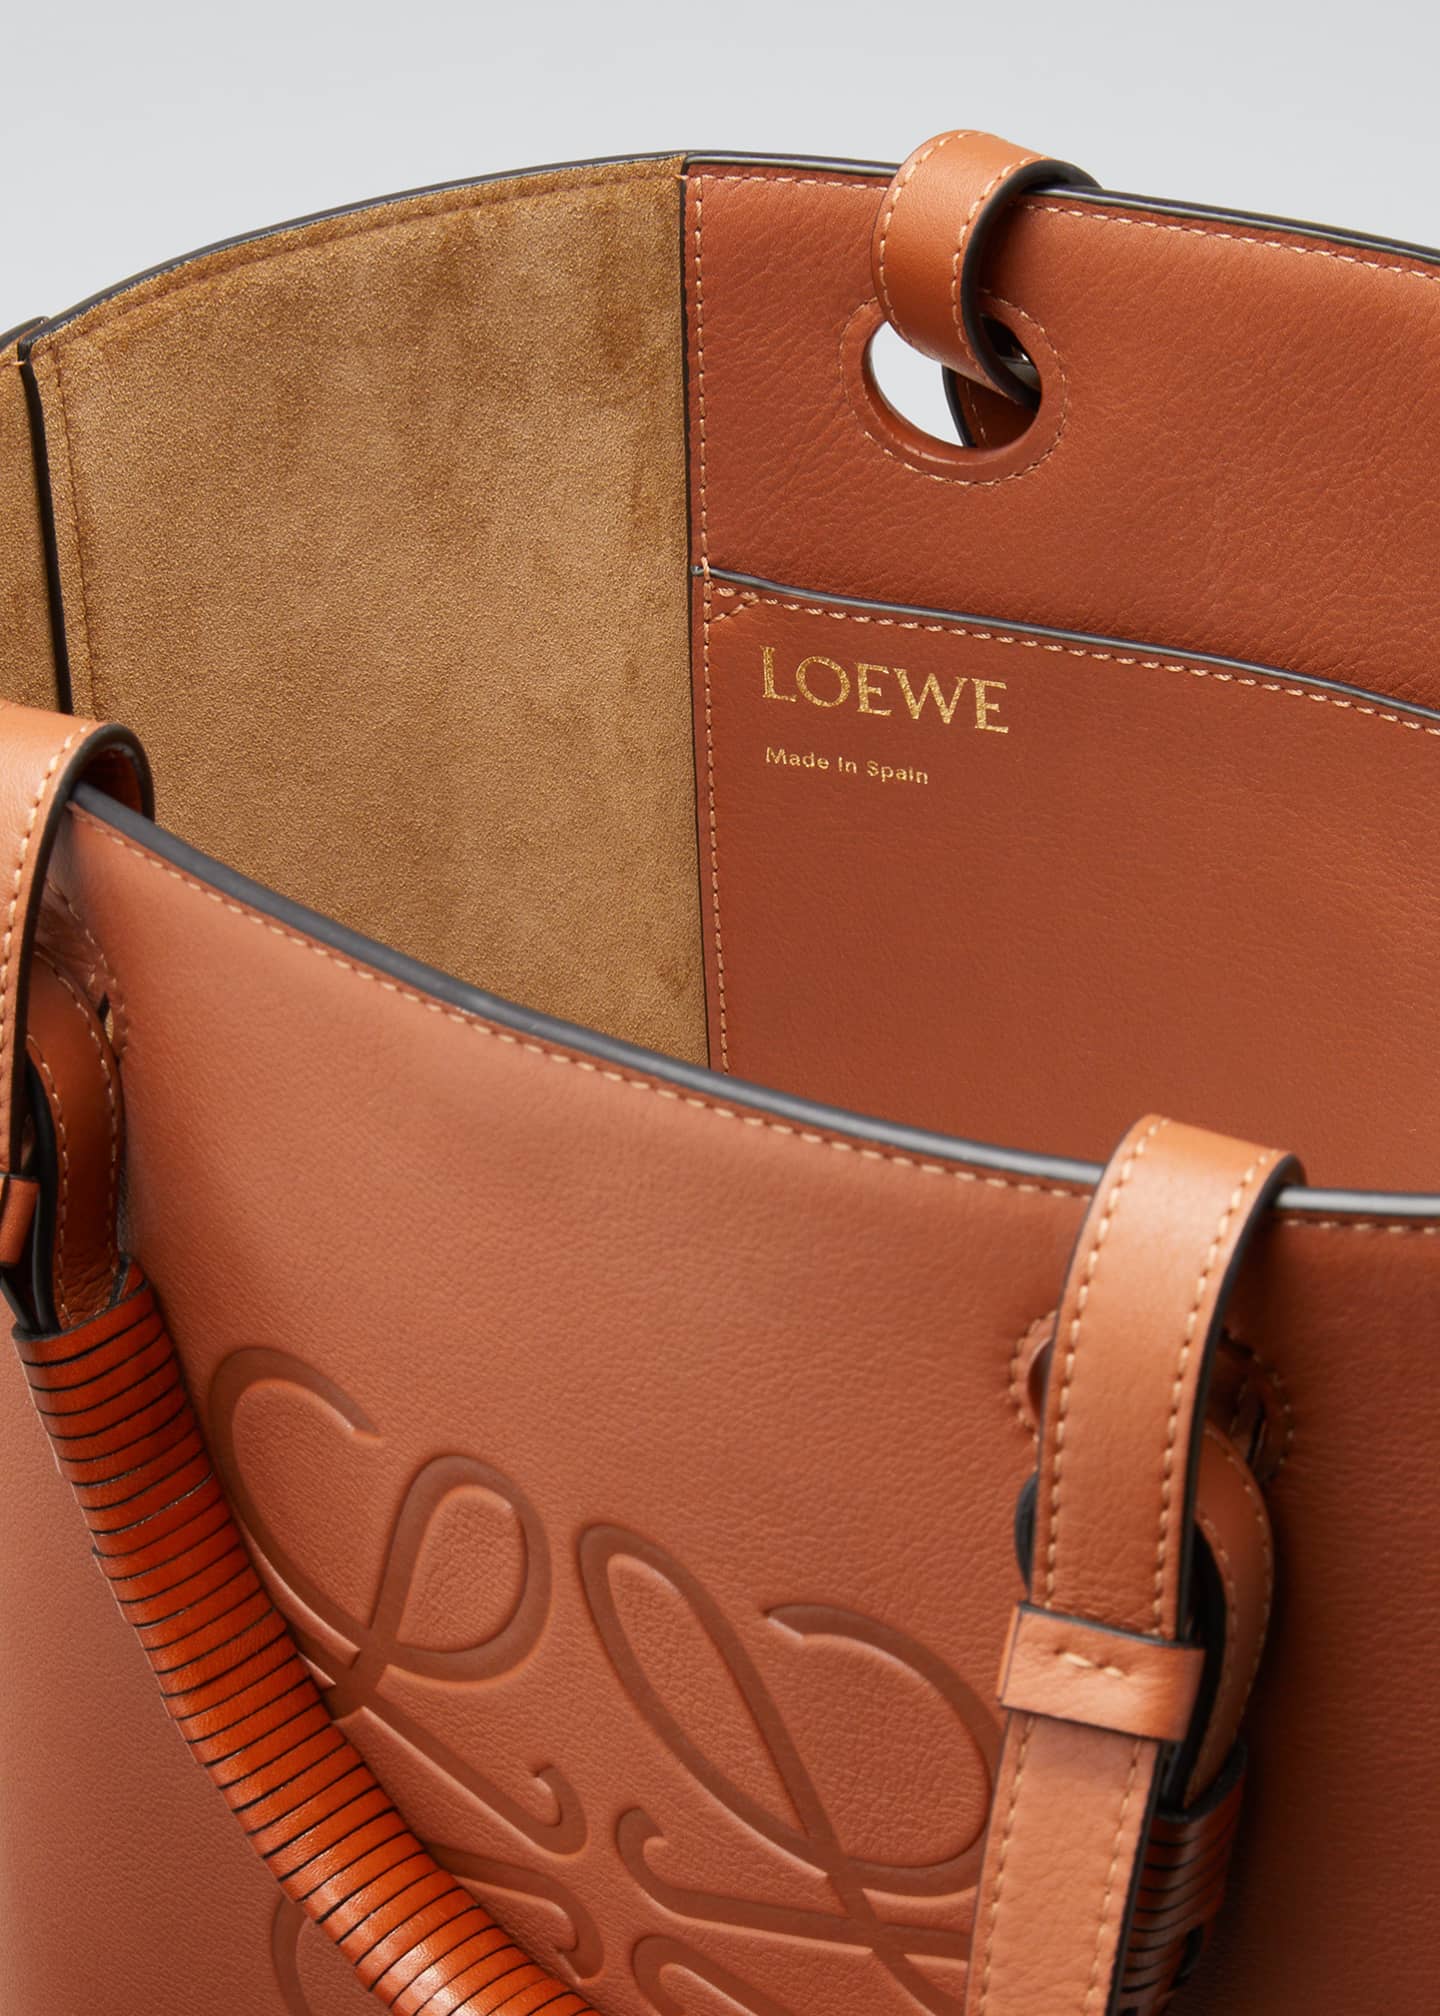 Loewe Anagram Small Classic Leather Tote Bag Bergdorf Goodman